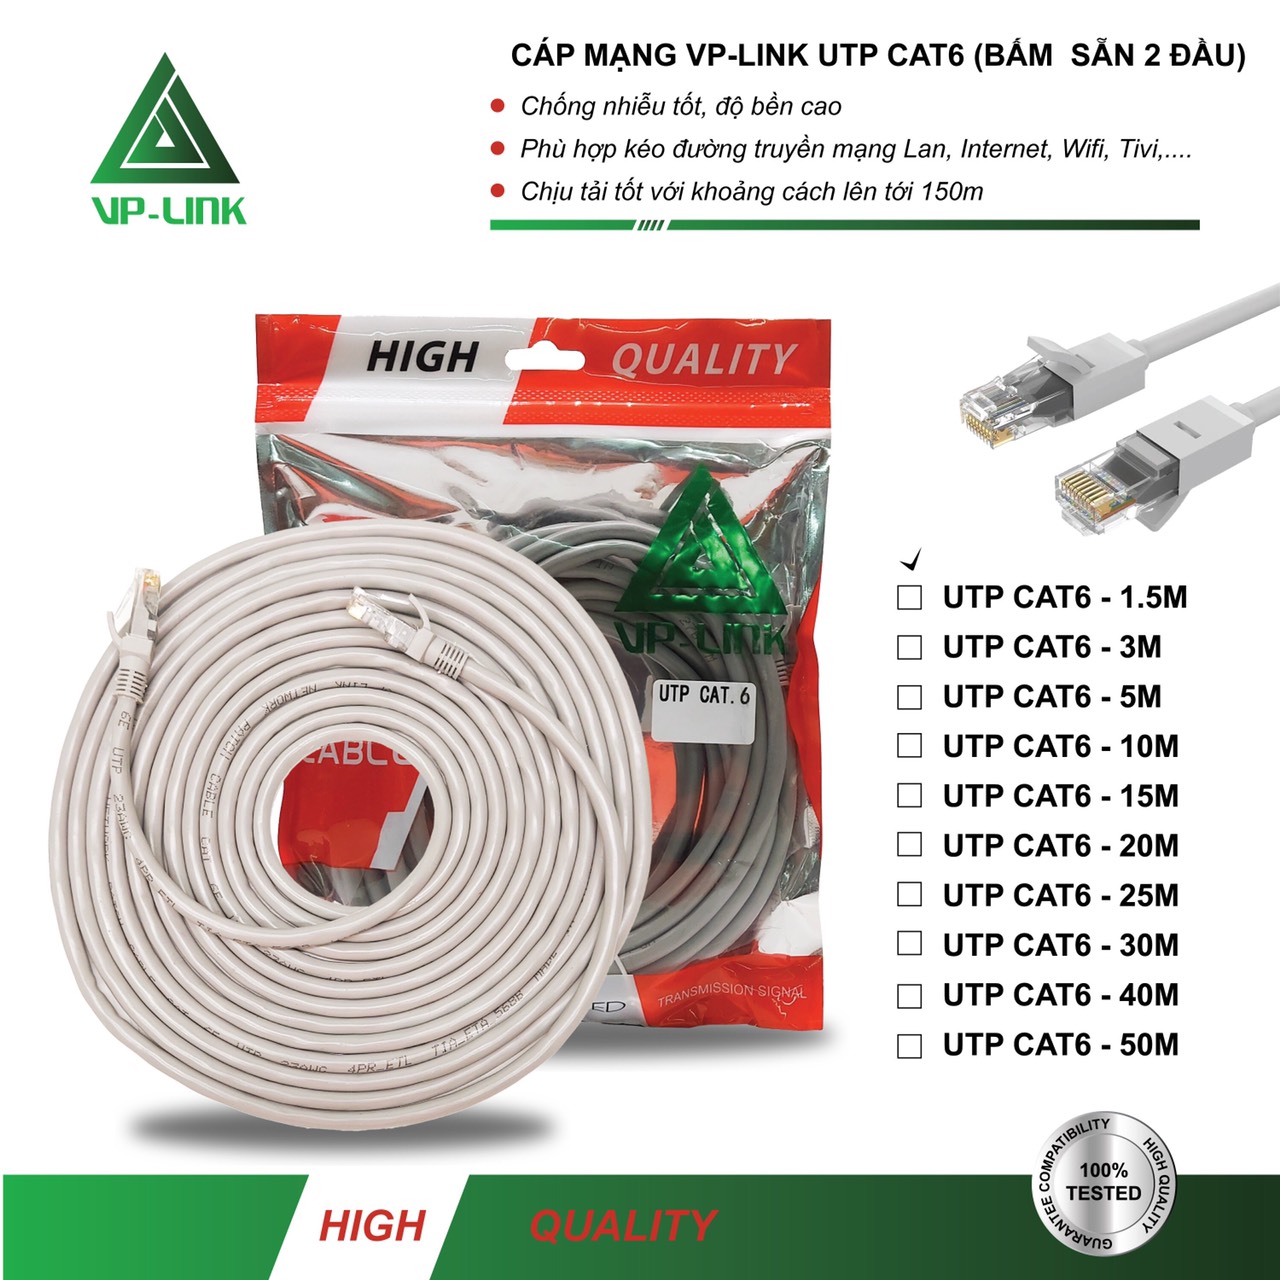 Cable LAN VP-LINK UTP CAT6 20m Bấm sẵn 2 đầu